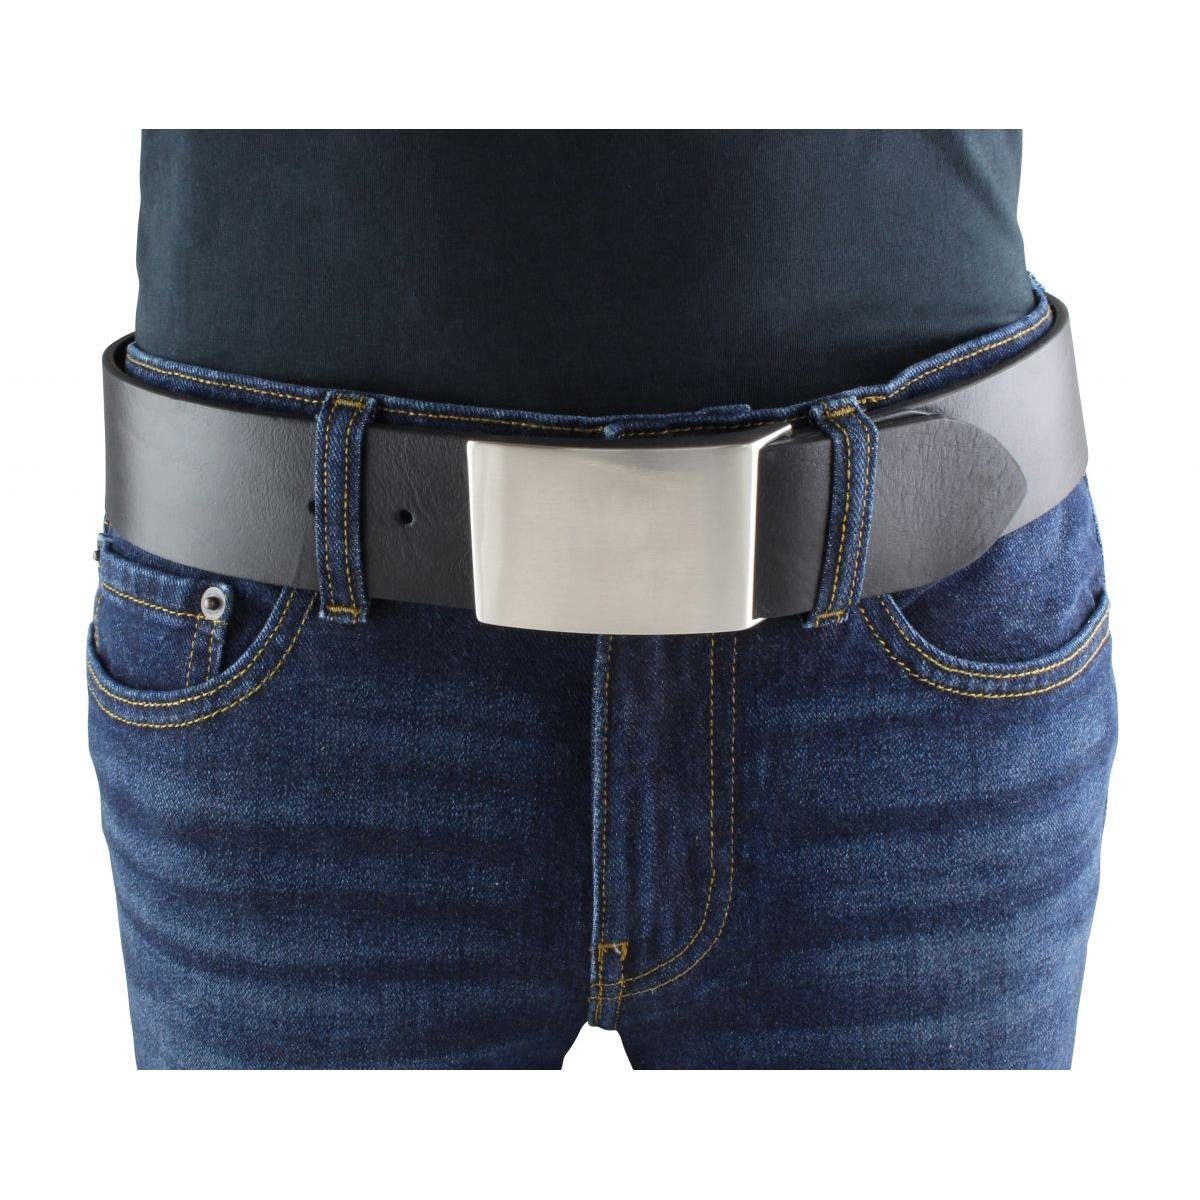 Herren 5,0 Tabac, Gürtel Vollrindleder Jeans Silber aus cm - - 50mm Ledergürtel BELTINGER Jeans-Gürtel für